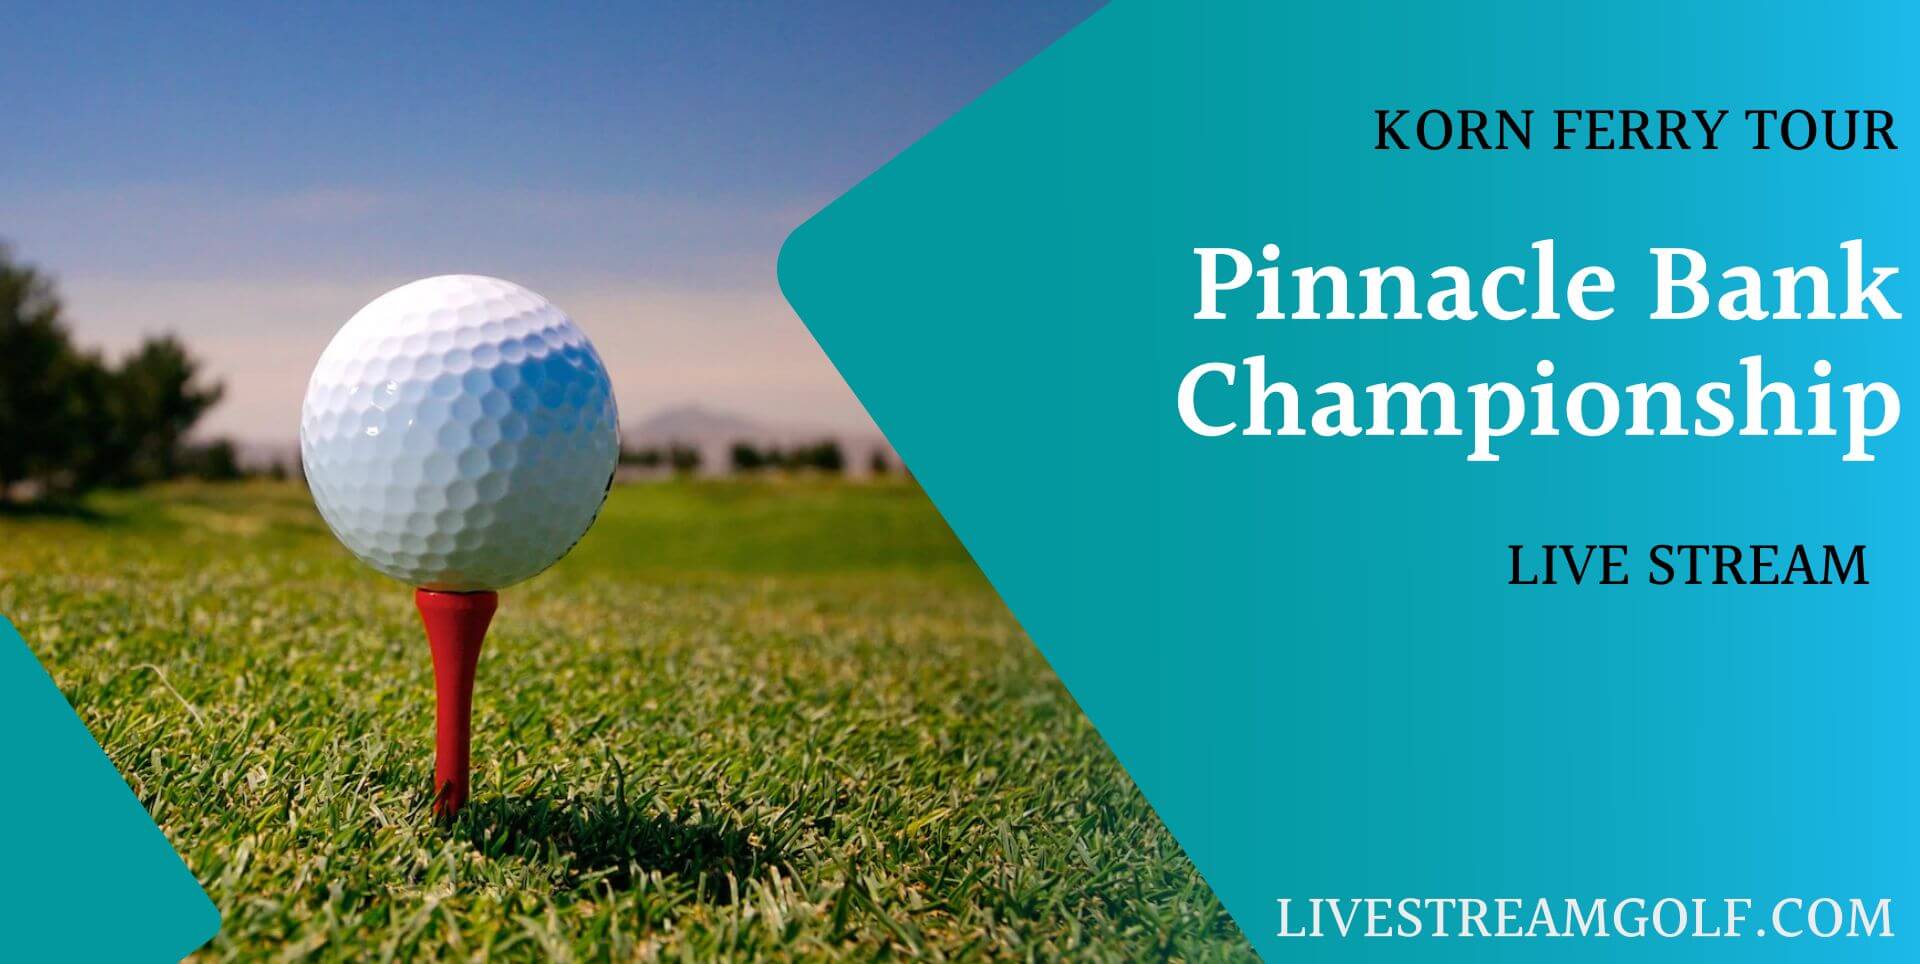 Pinnacle Bank Championship Day 1 Live Stream: Korn Ferry 2022